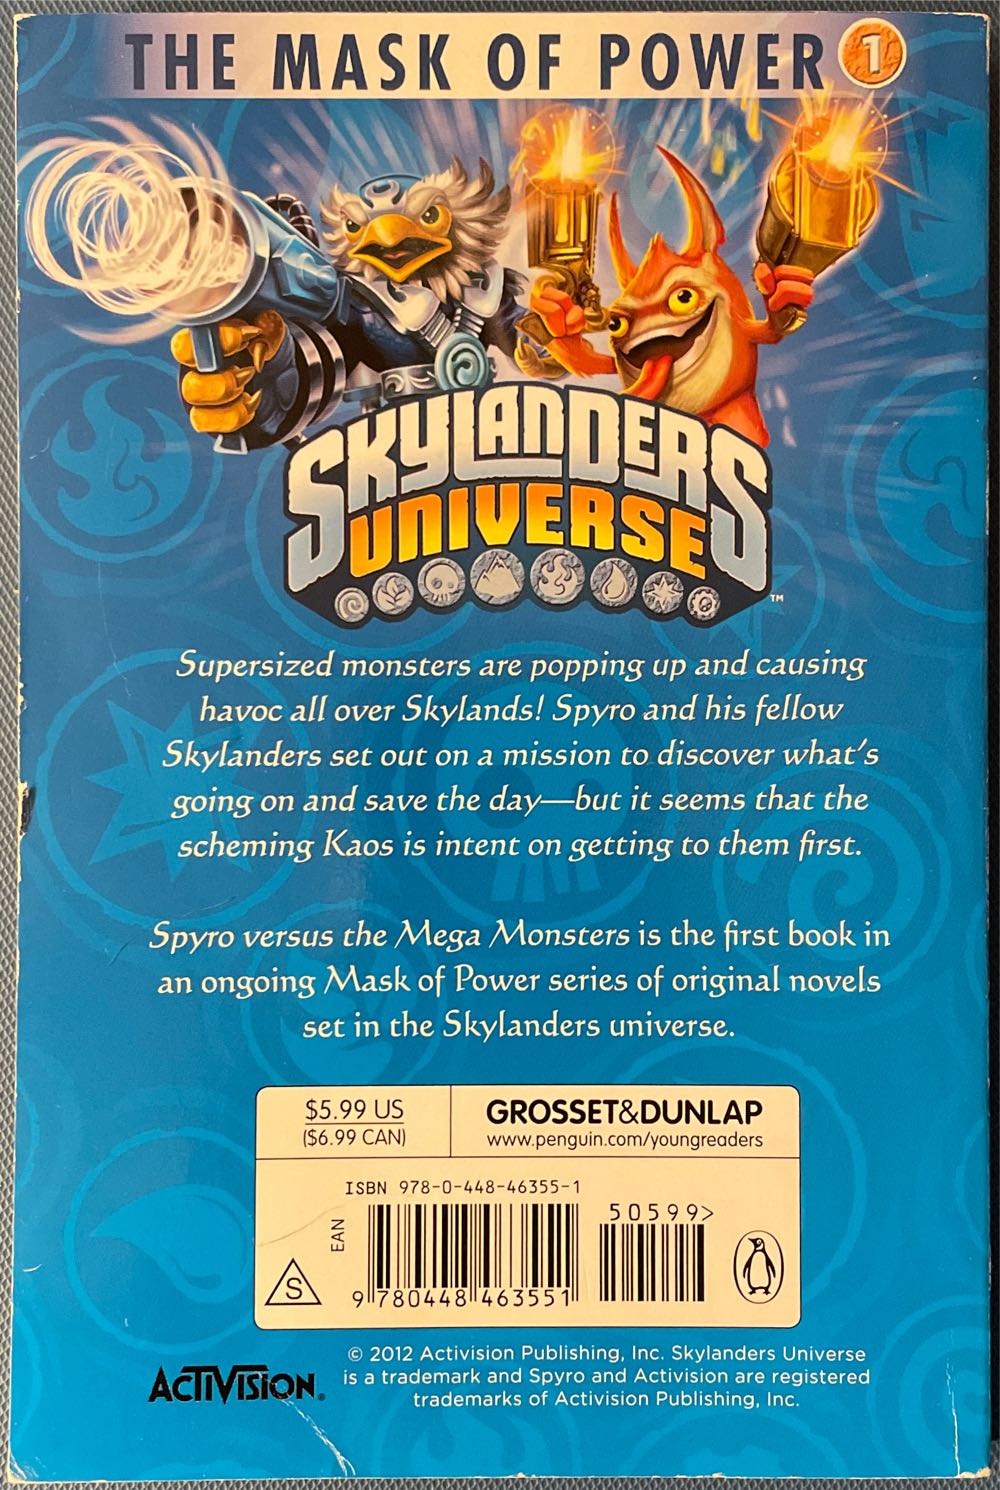 Skylanders Universe #1: The Mask Of Power Spyro Vs. The Mega Monsters - Onk Beakman (Grosset & Dunlap - Paperback) book collectible [Barcode 9780448463551] - Main Image 2